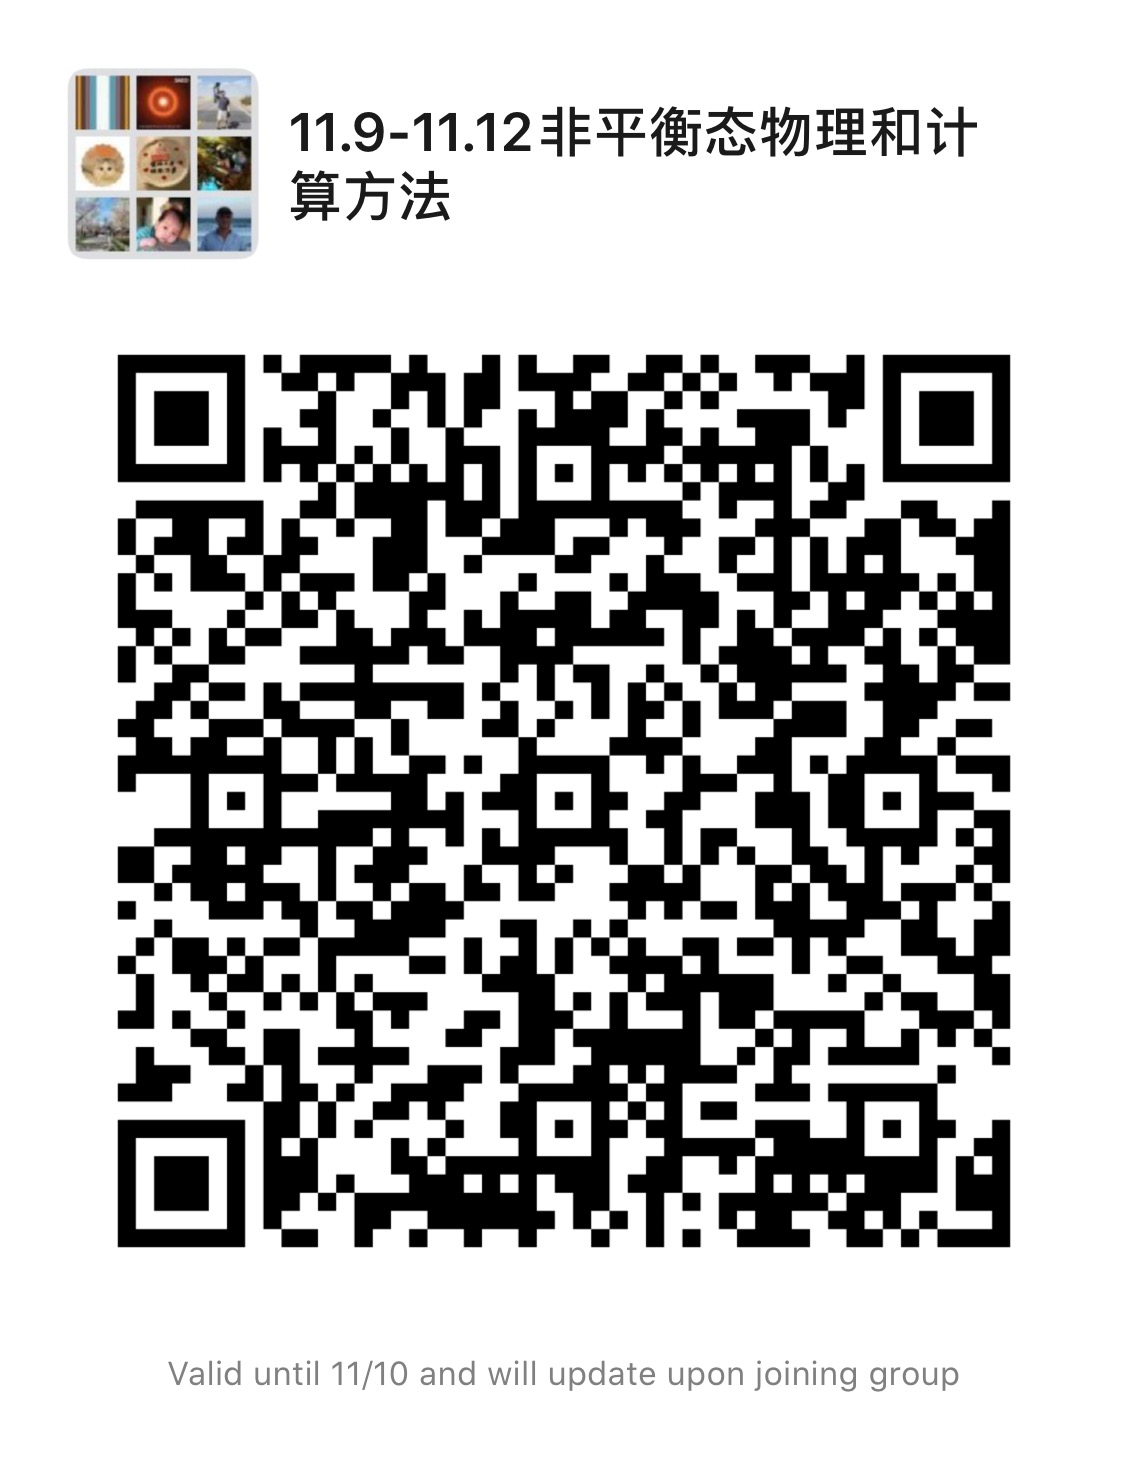 WeChat group.jpg